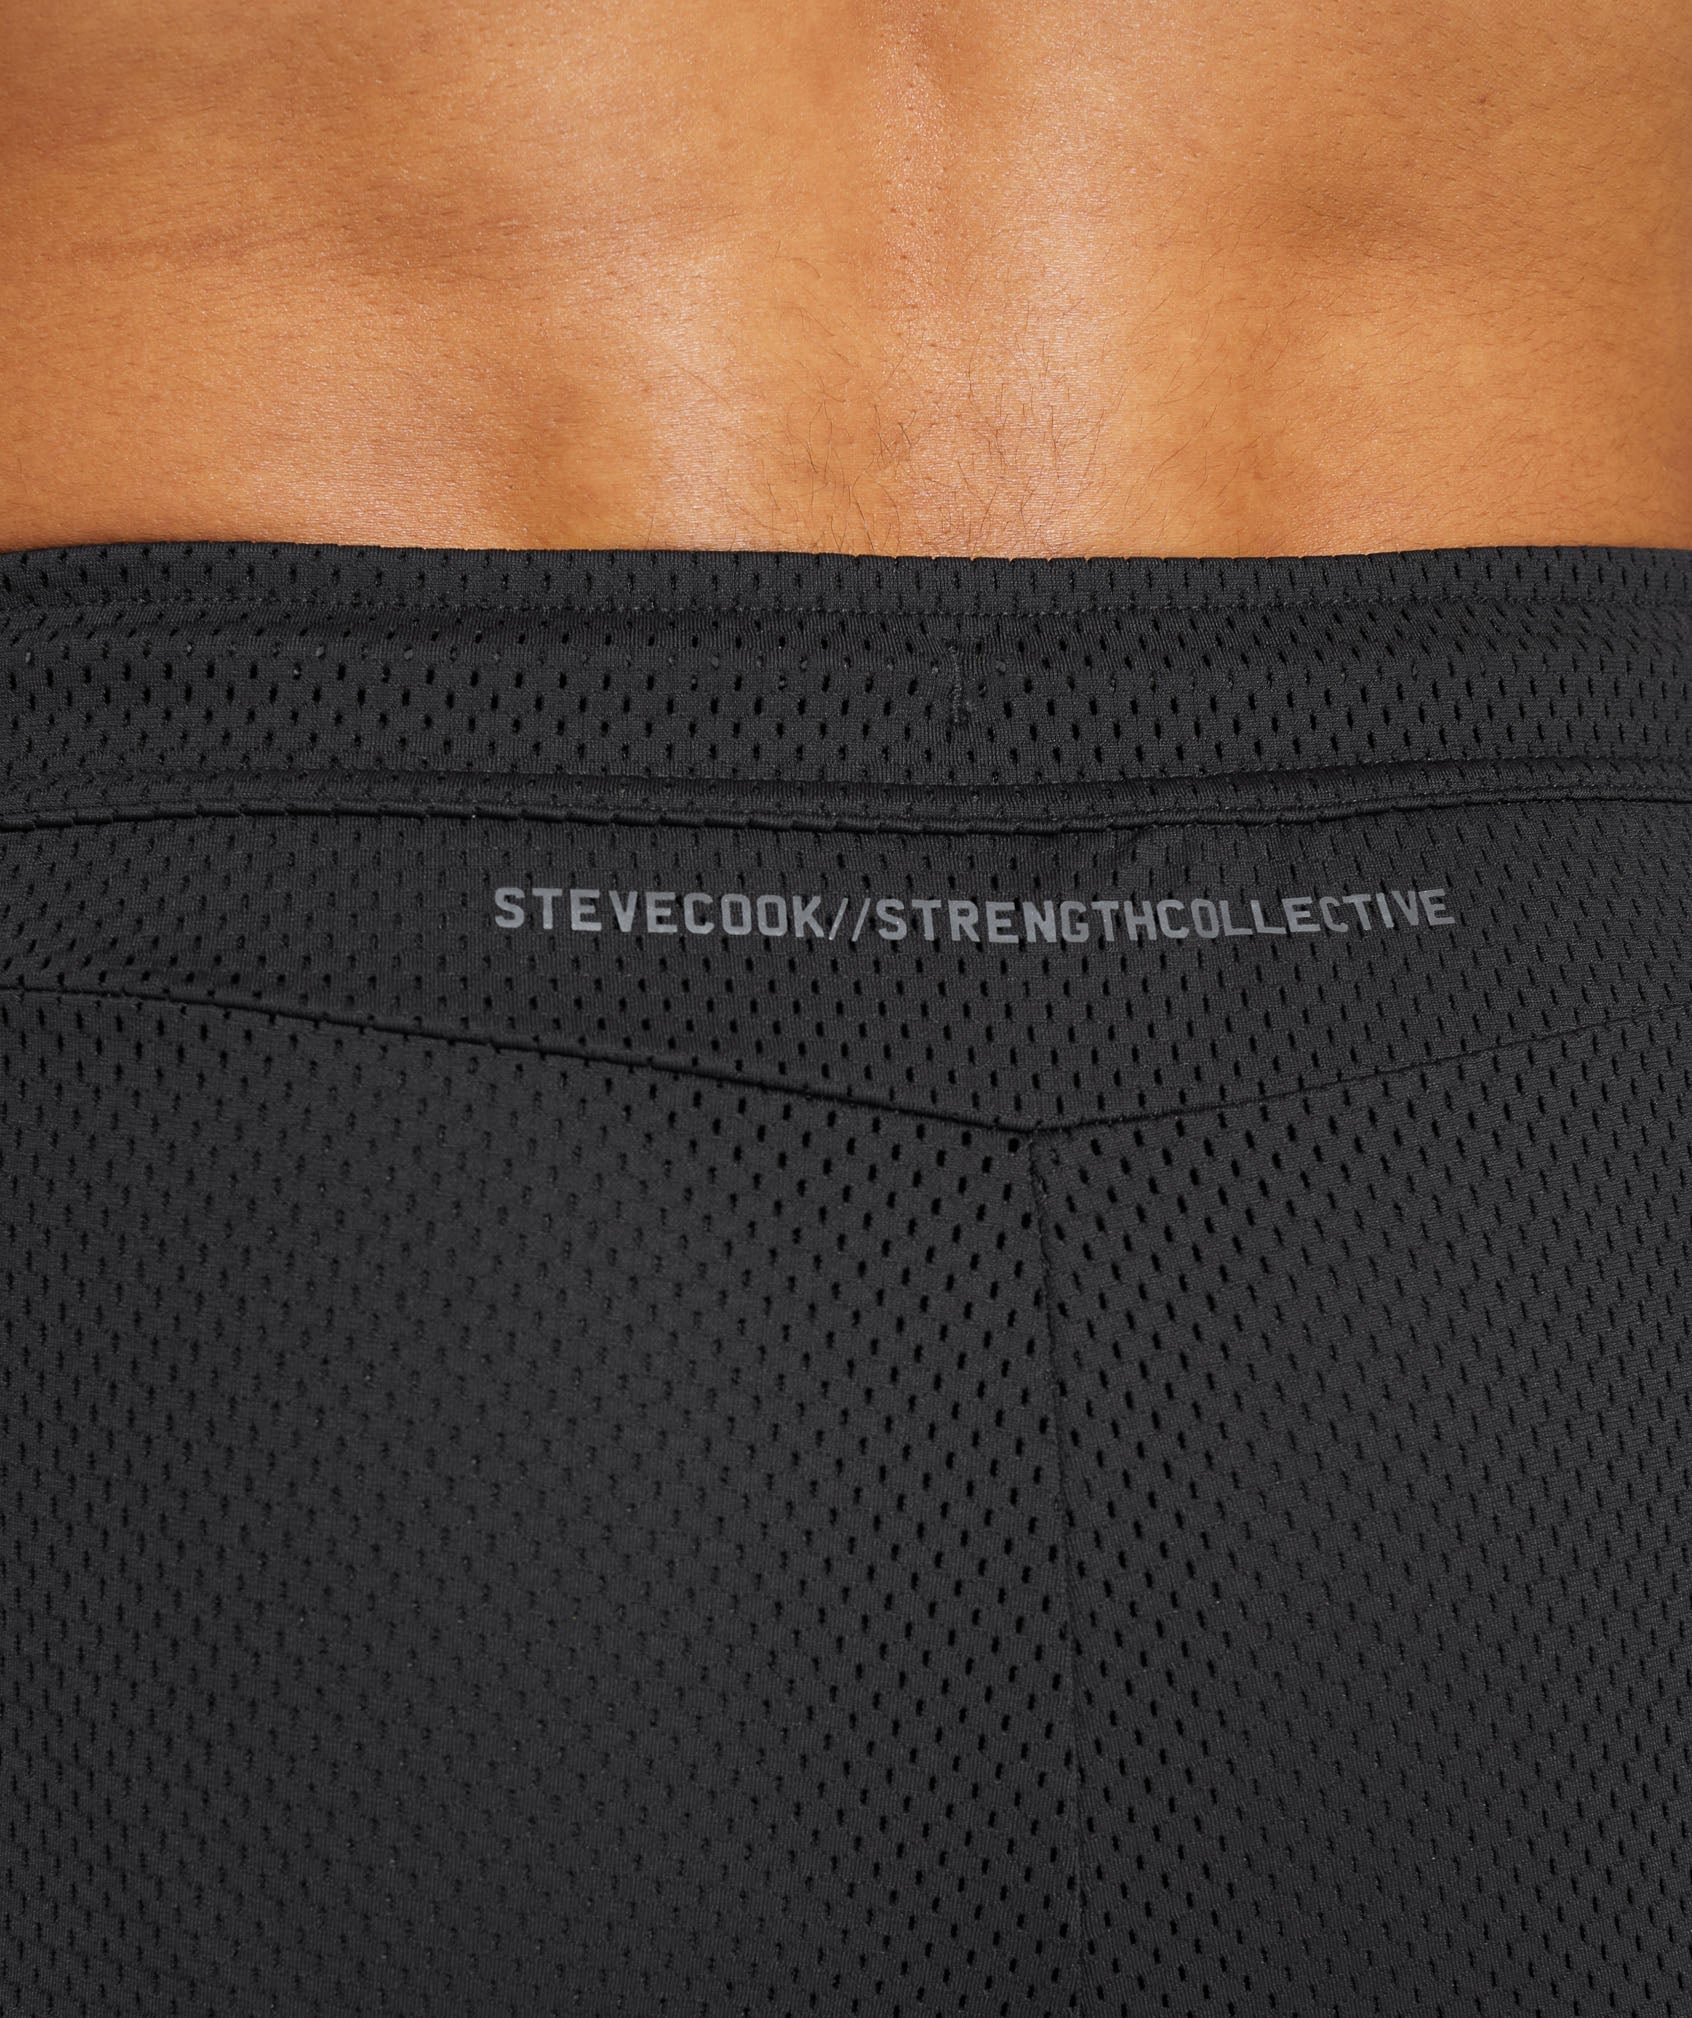 Gymshark//Steve Cook Mesh Shorts in Black - view 5